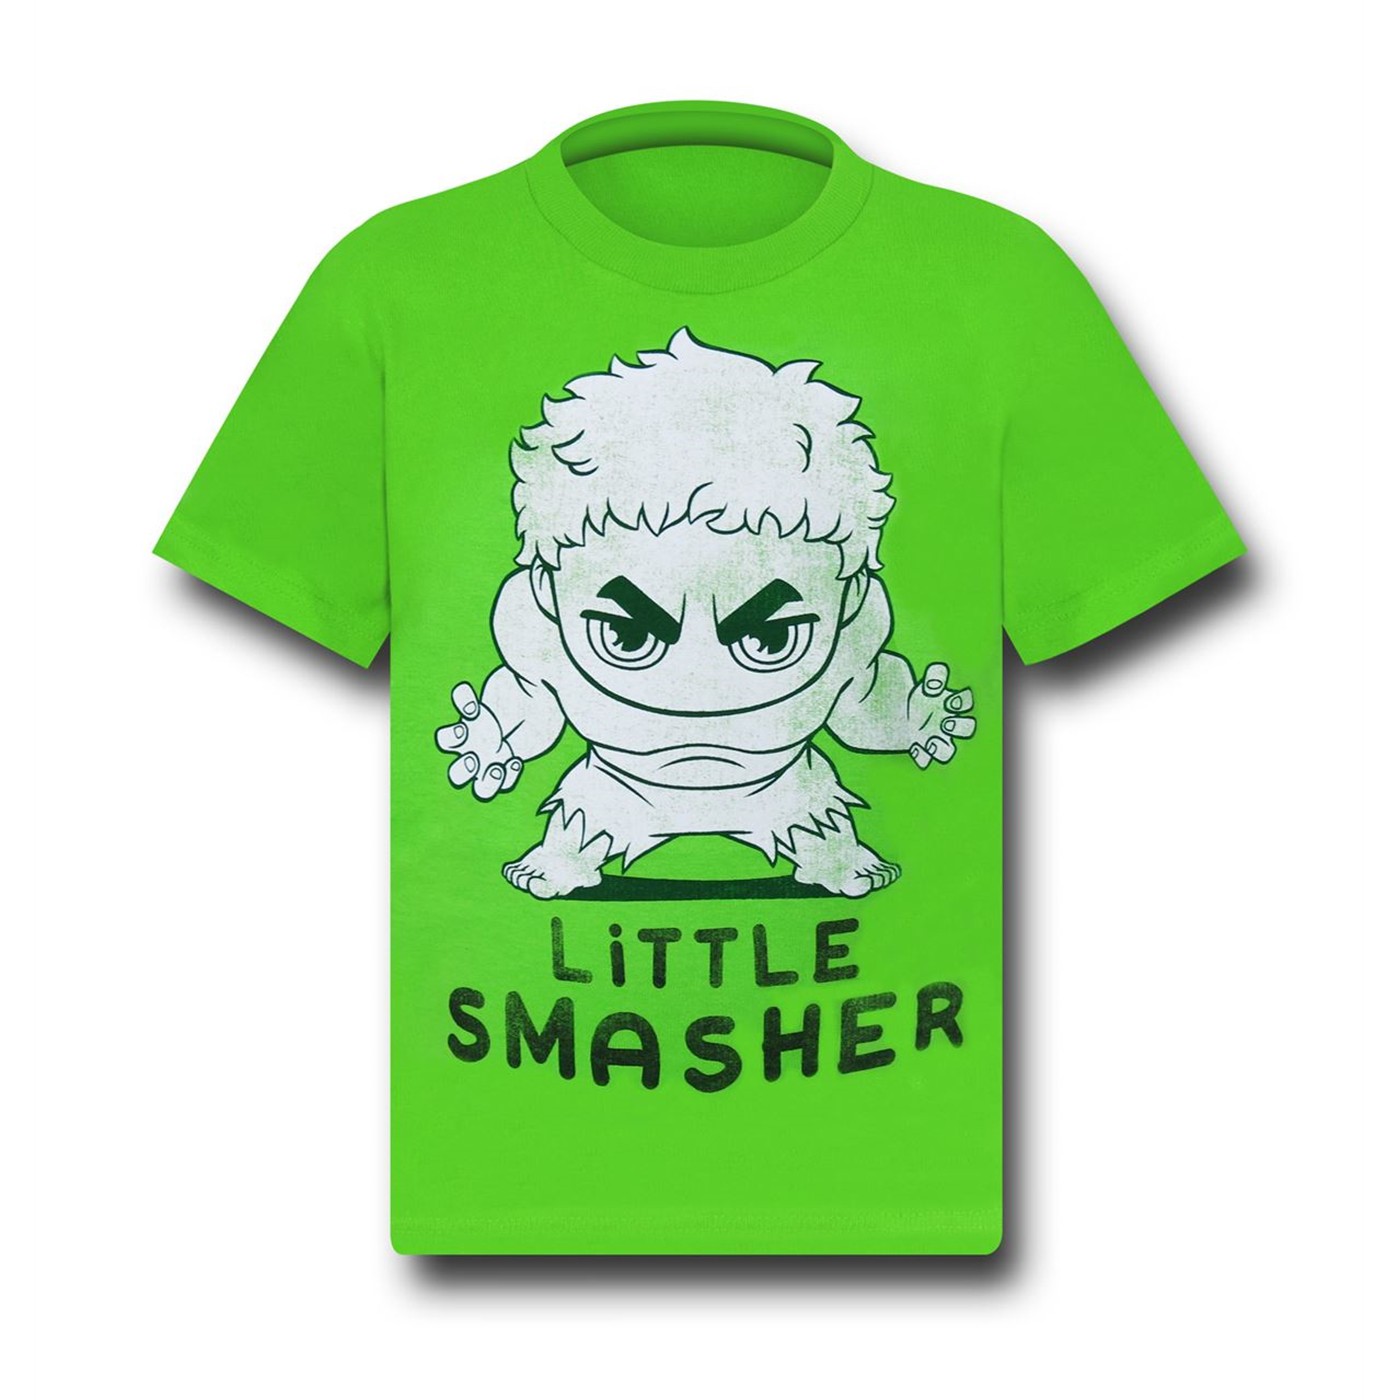 Hulk Little Smasher Kids T-Shirt